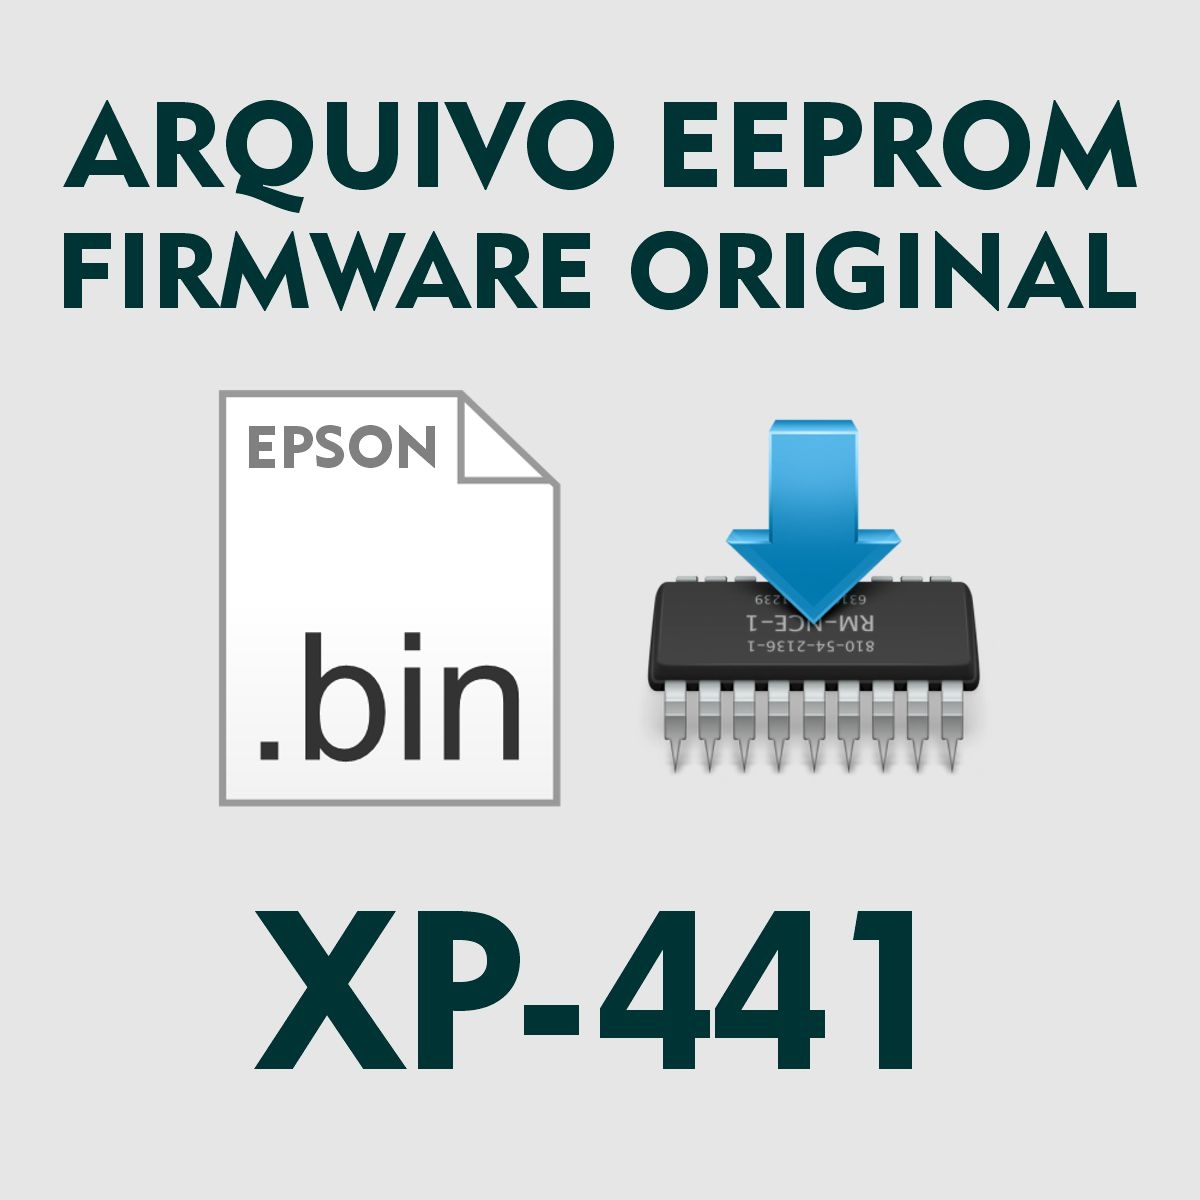 Epson XP-441 | Arquivo de Eeprom Firmware .bin - Original